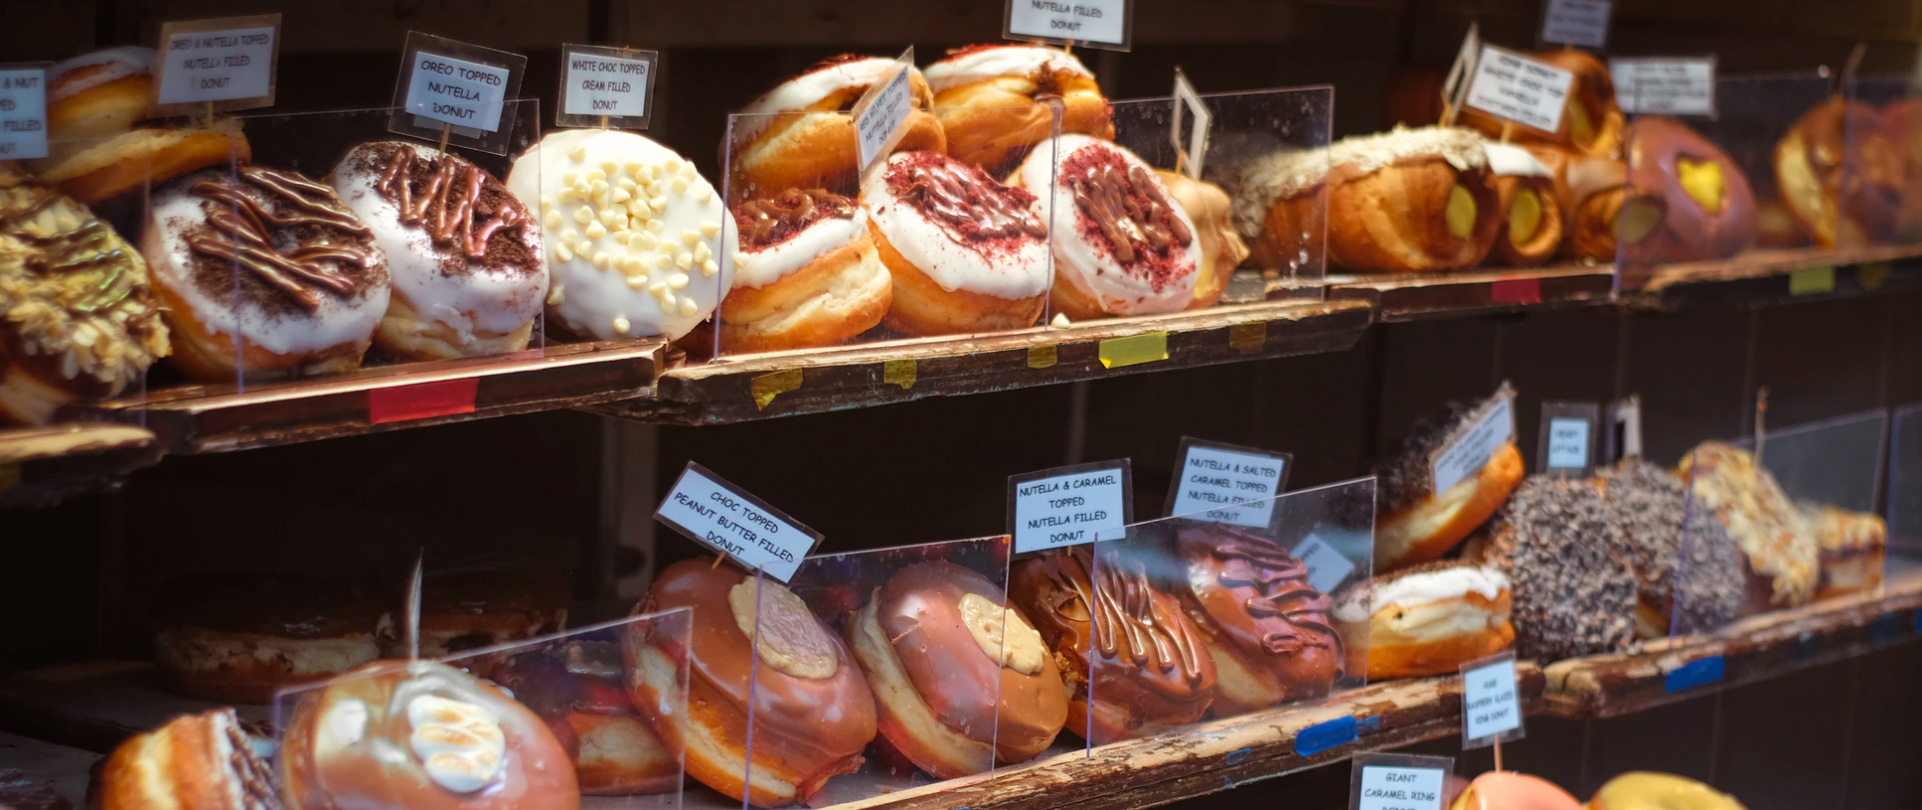 Donuts at doughnut shop. Unsplash - Viktor Forgacs